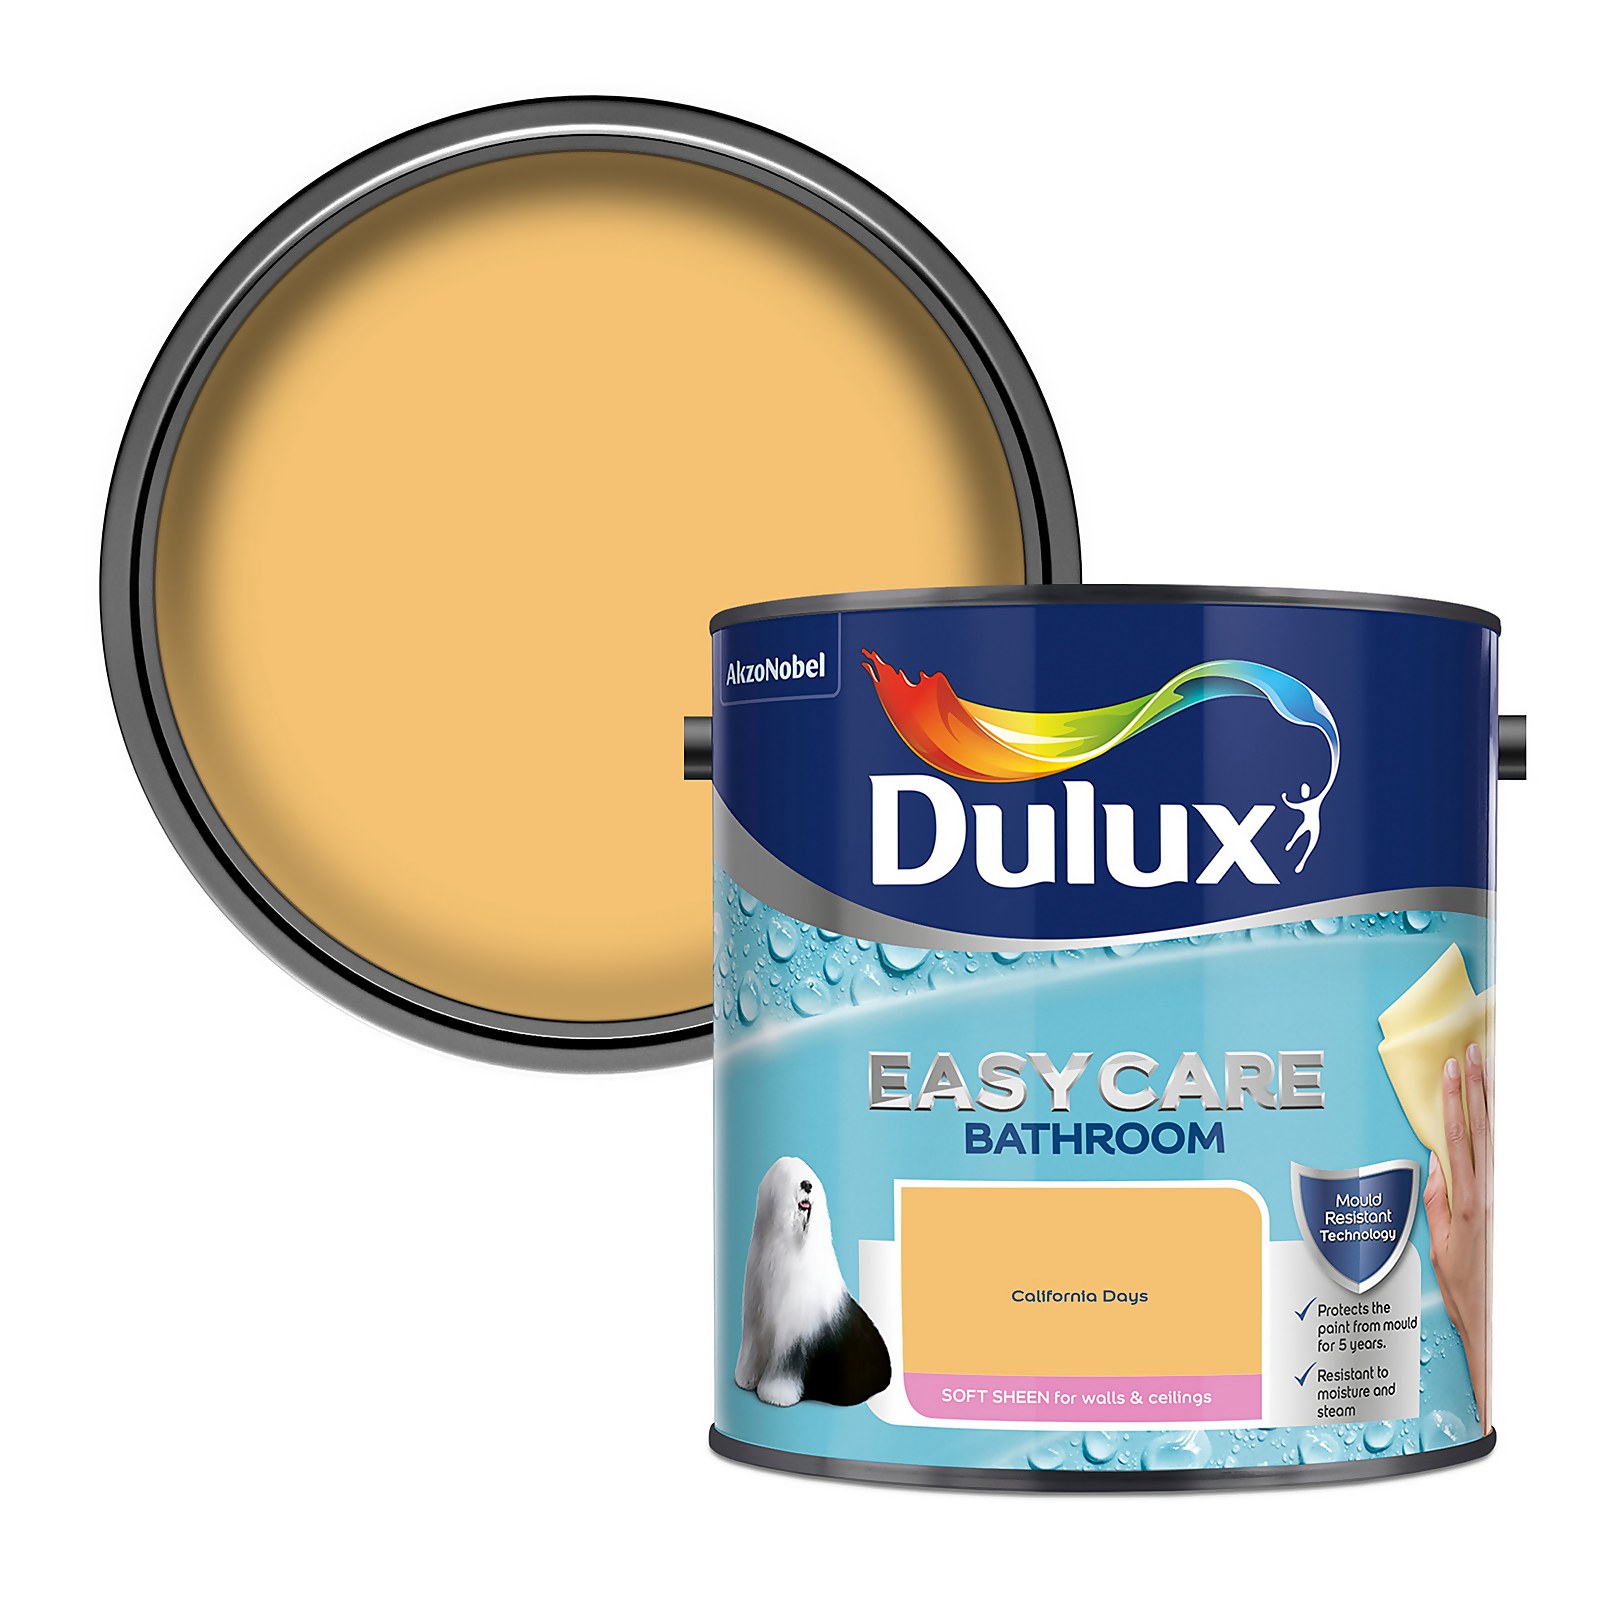 Dulux Easycare Bathroom Soft Sheen Paint California Days - 2.5L